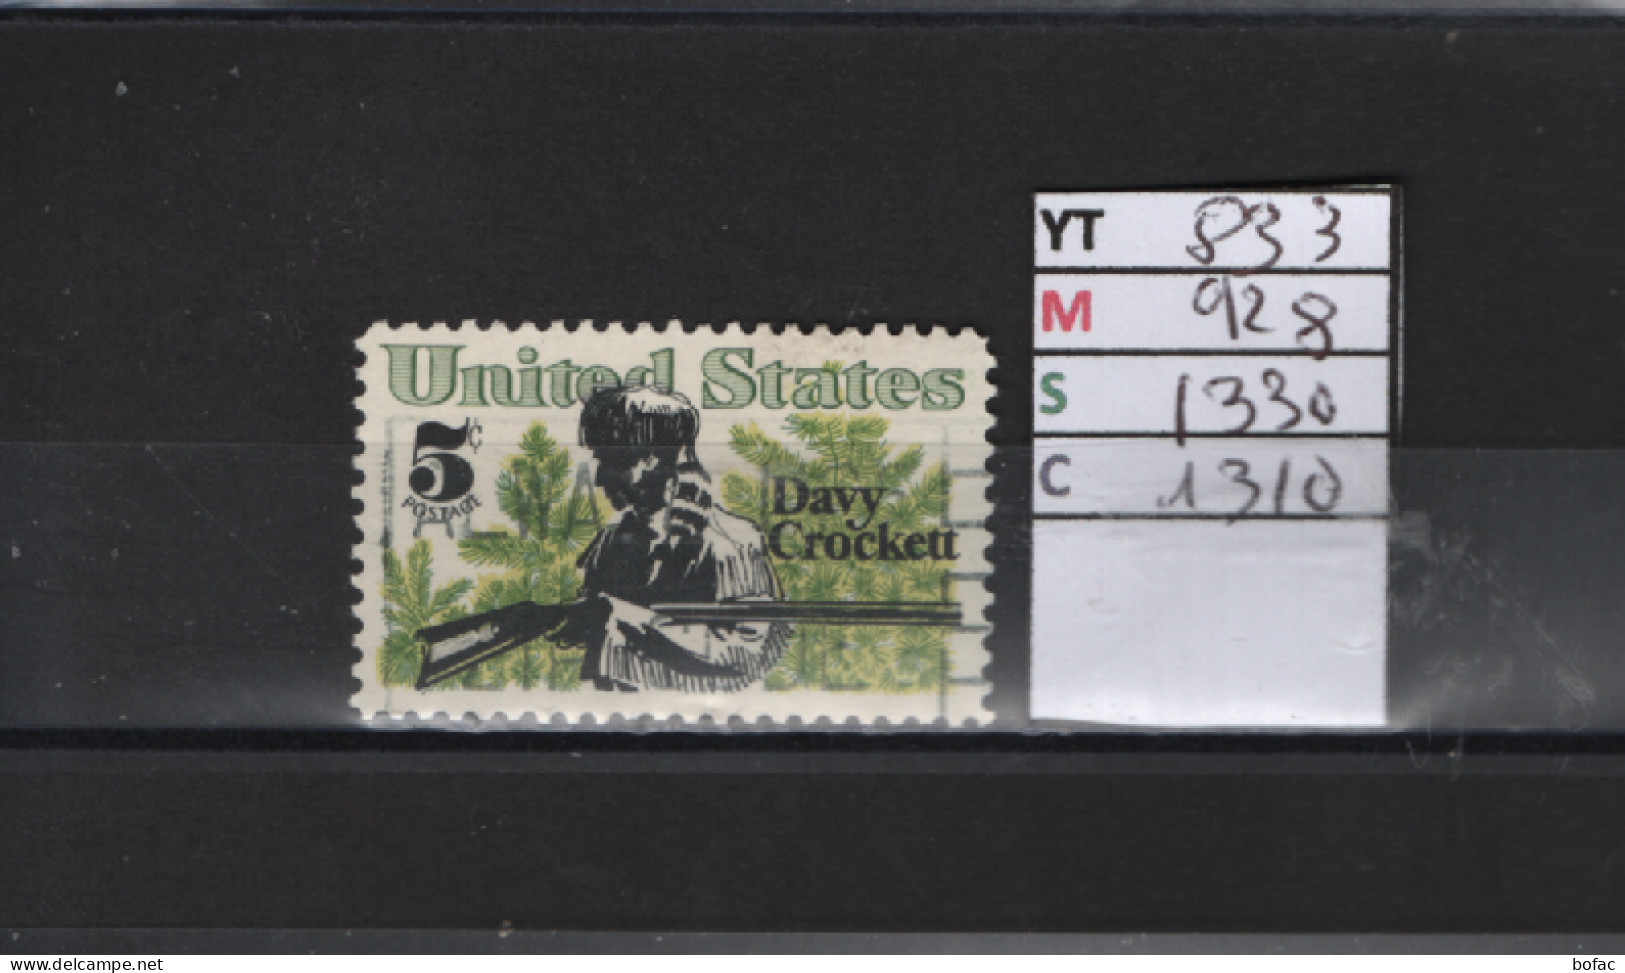 PRIX FIXE Obl  833 YT 928 MIC 1330 SCO 1310 GIB  David Crockett 1967 Etats Unis  58A/12 - Used Stamps